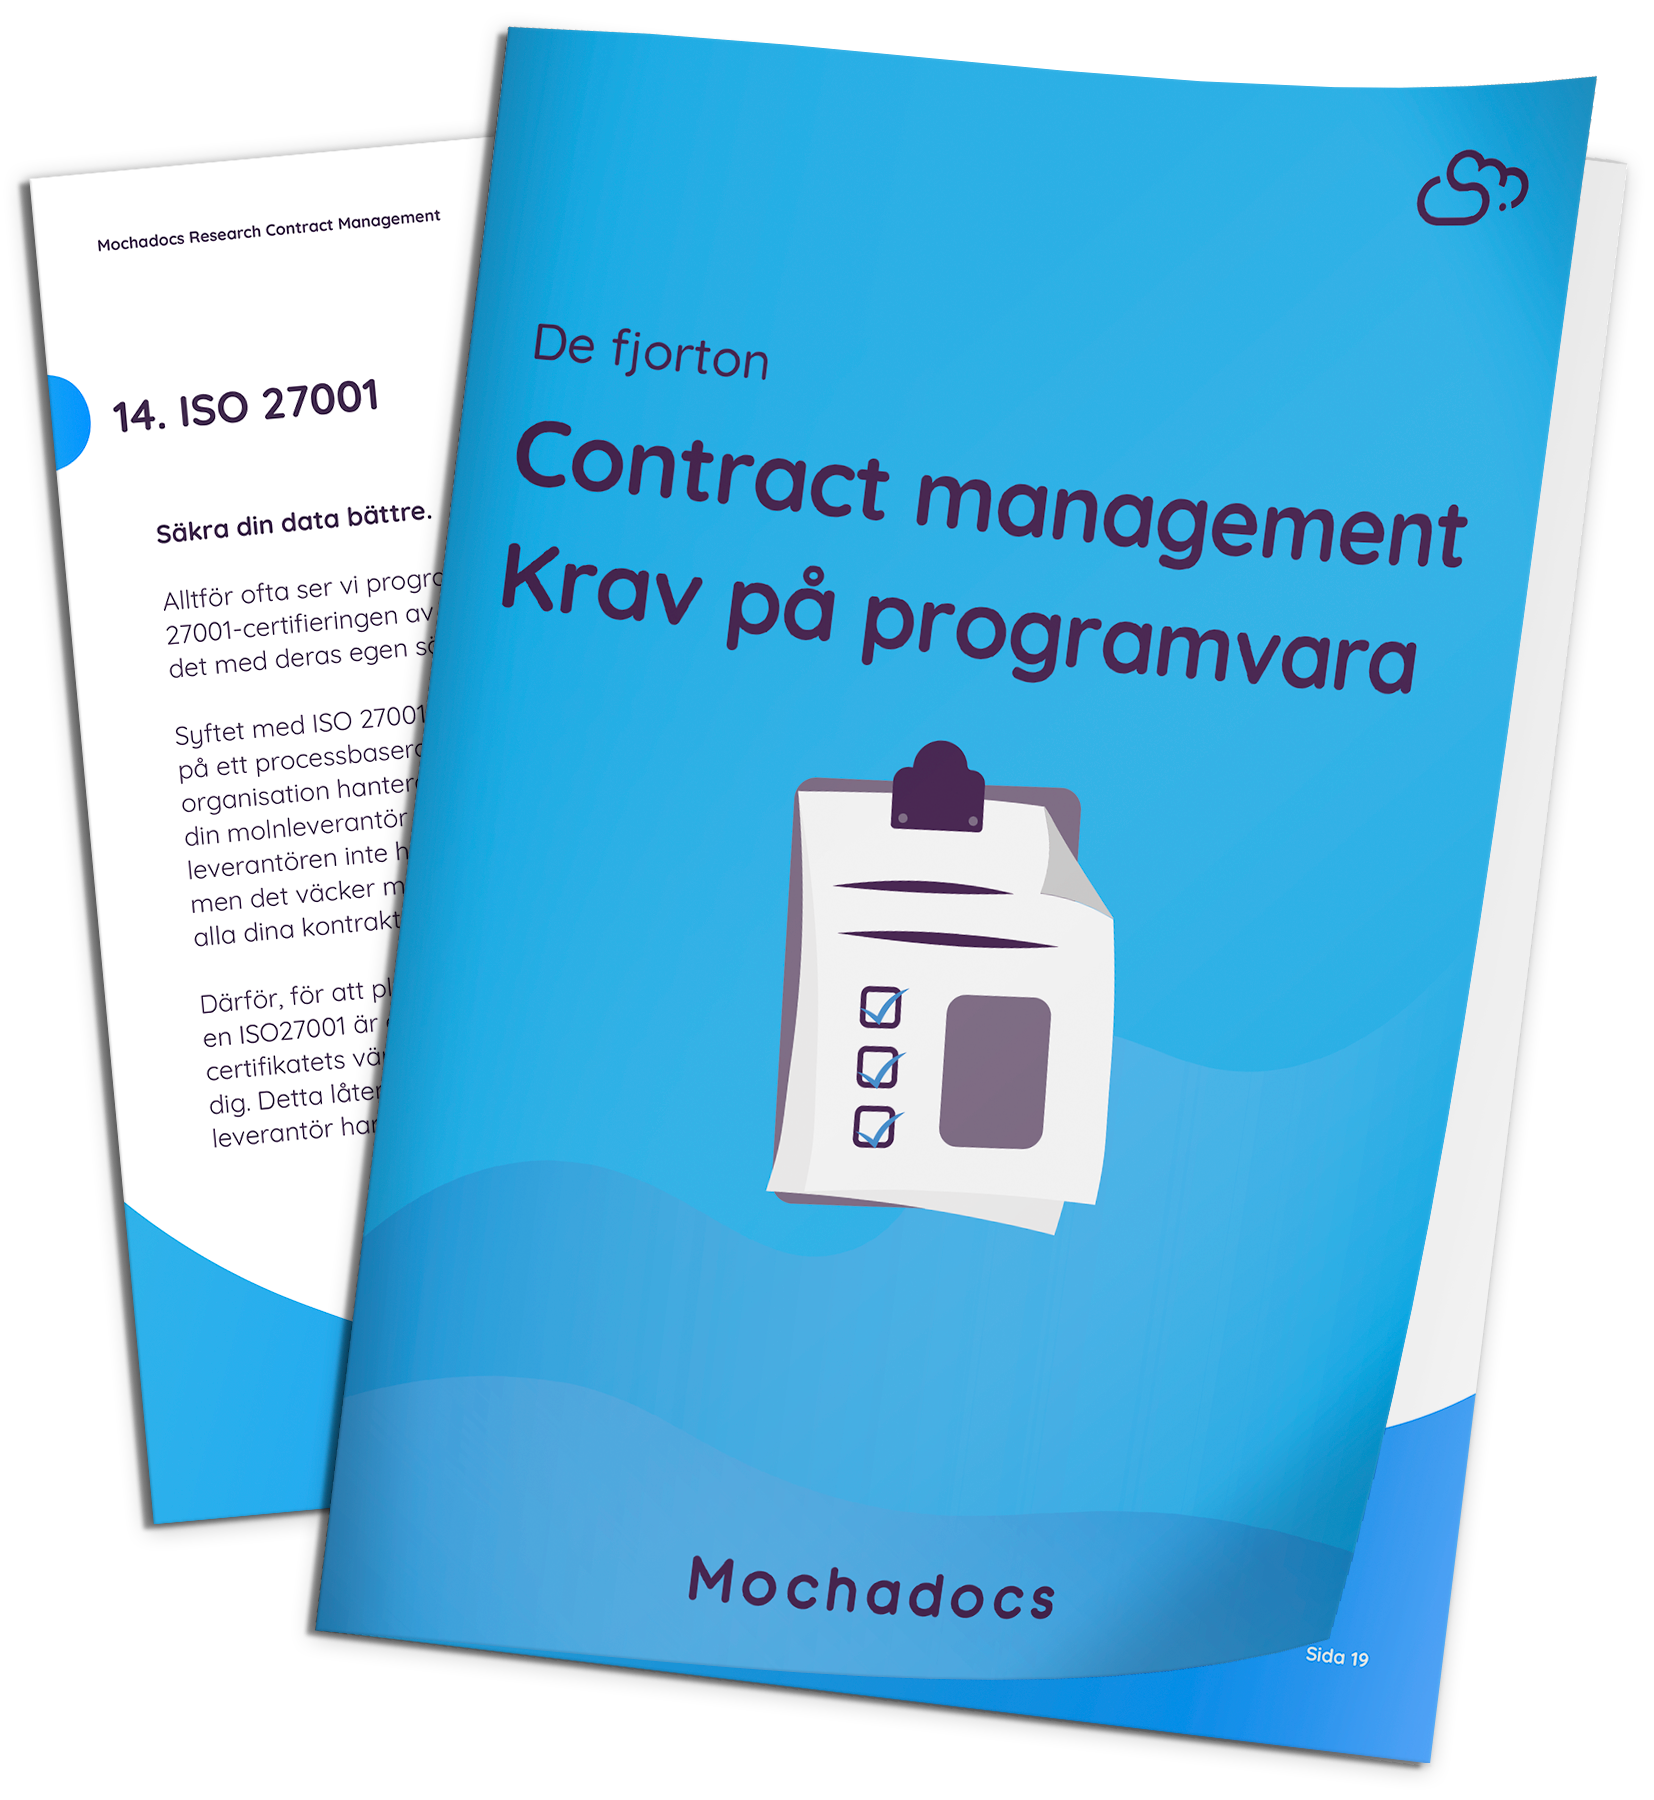 Mochadocs - Contract Management - eBook - De fjorton Contract Management Krav på programvara